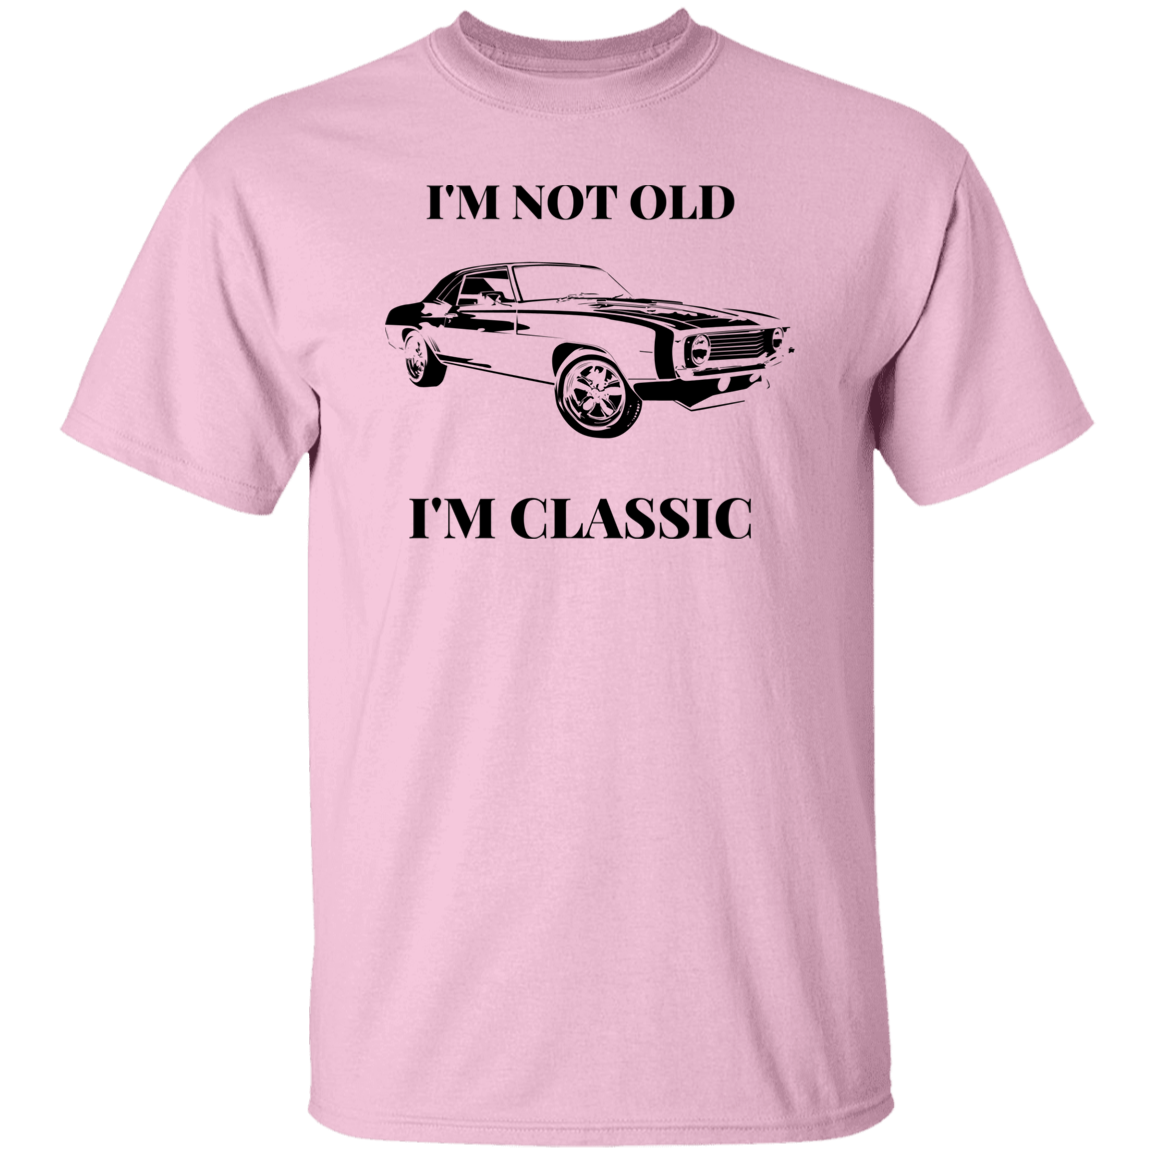 I'M A CLASSIC  5.3 oz. T-Shirt